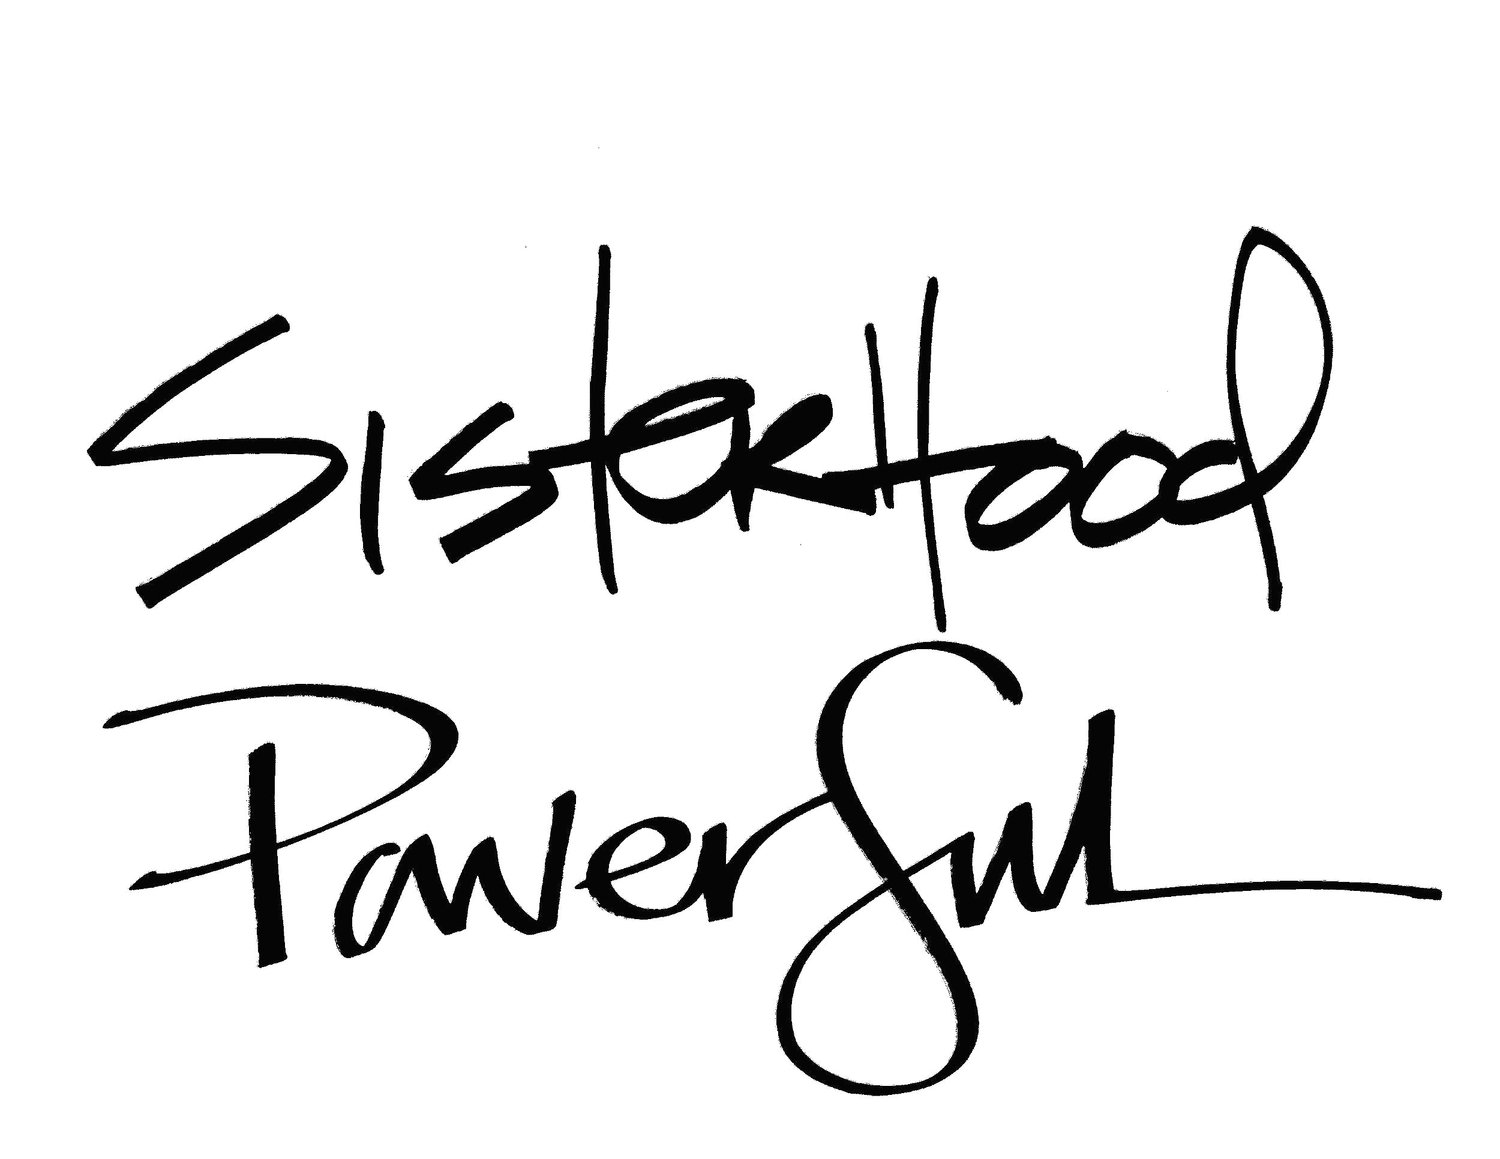 SISTERHOOD POWERFUL